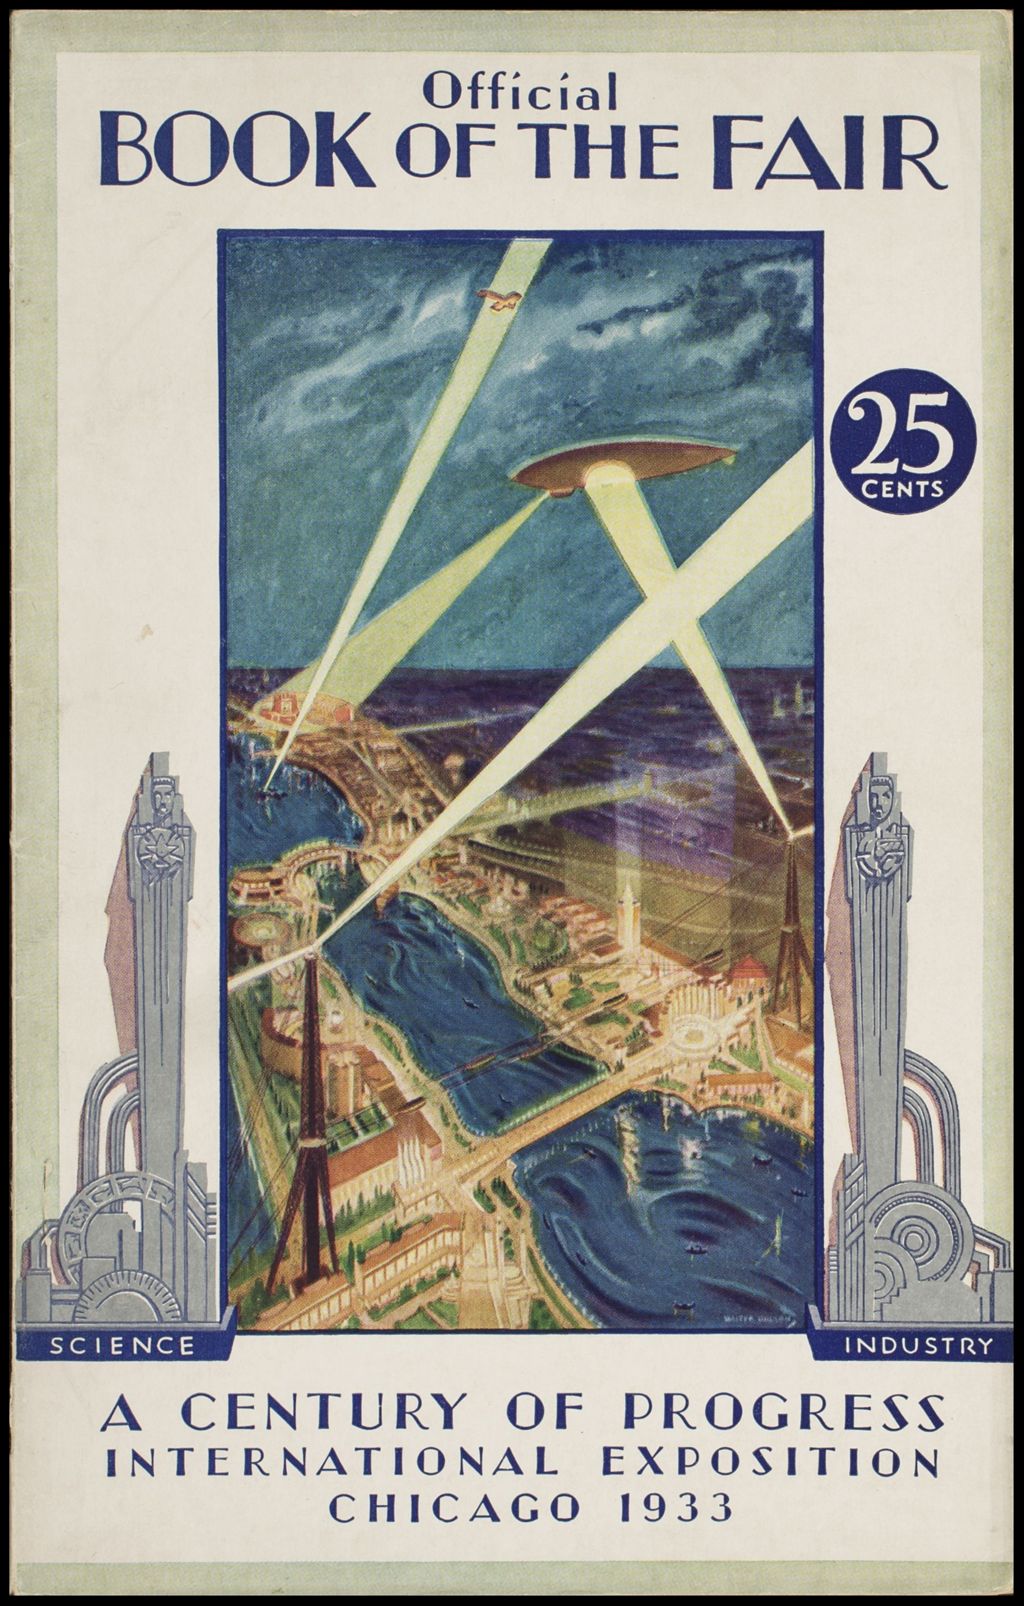 Official Book of The Fair Giving Pre-Exposition Information, 1932-1933 (Folder 16-174)